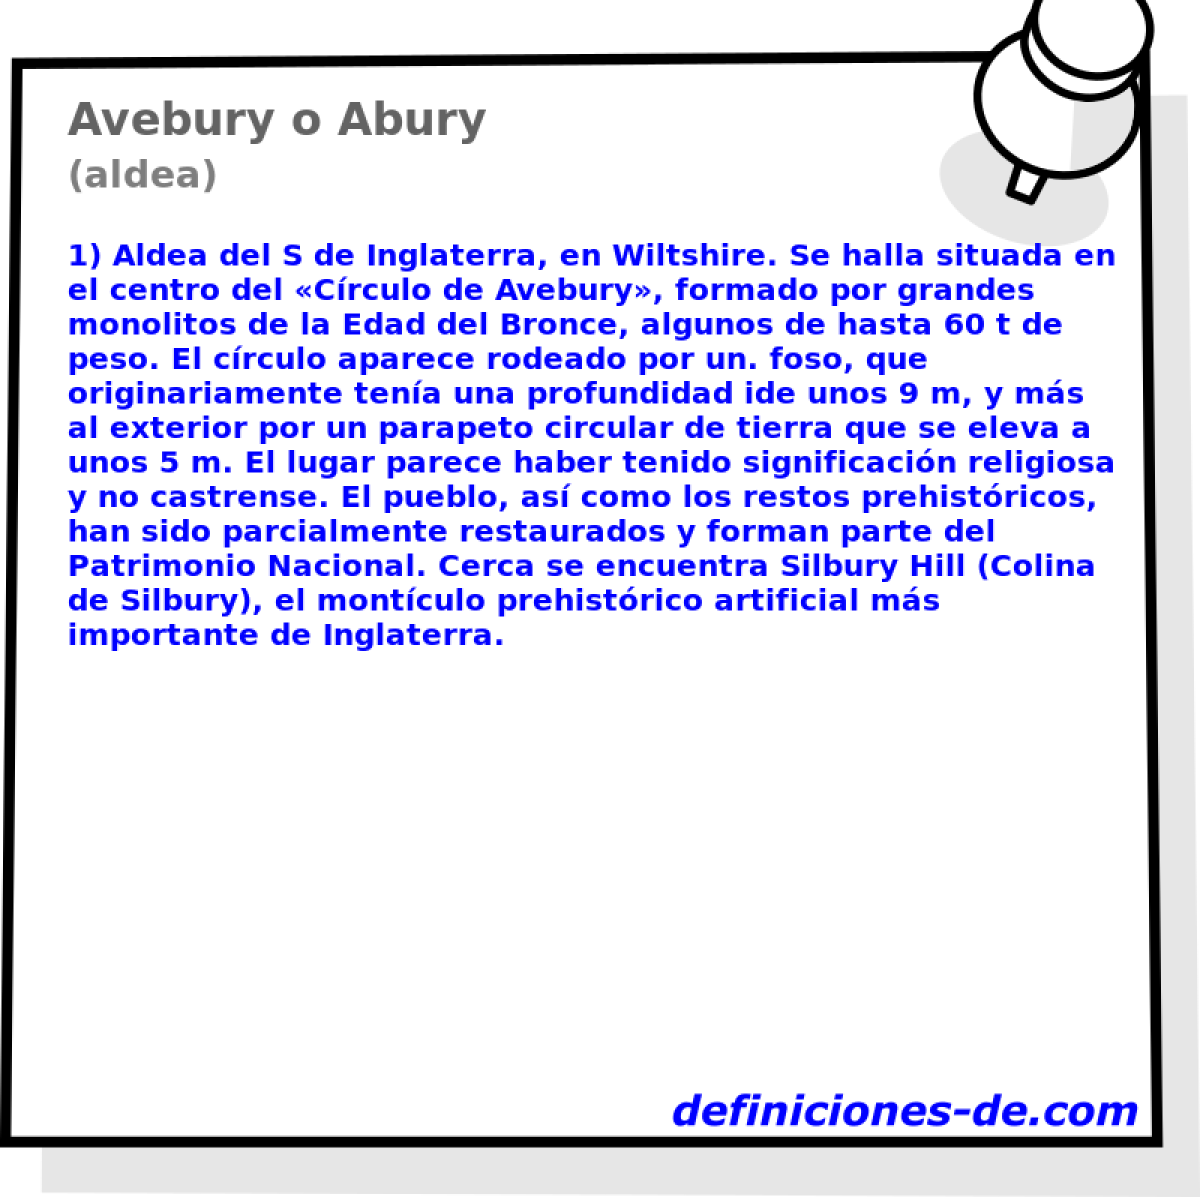 Avebury o Abury (aldea)